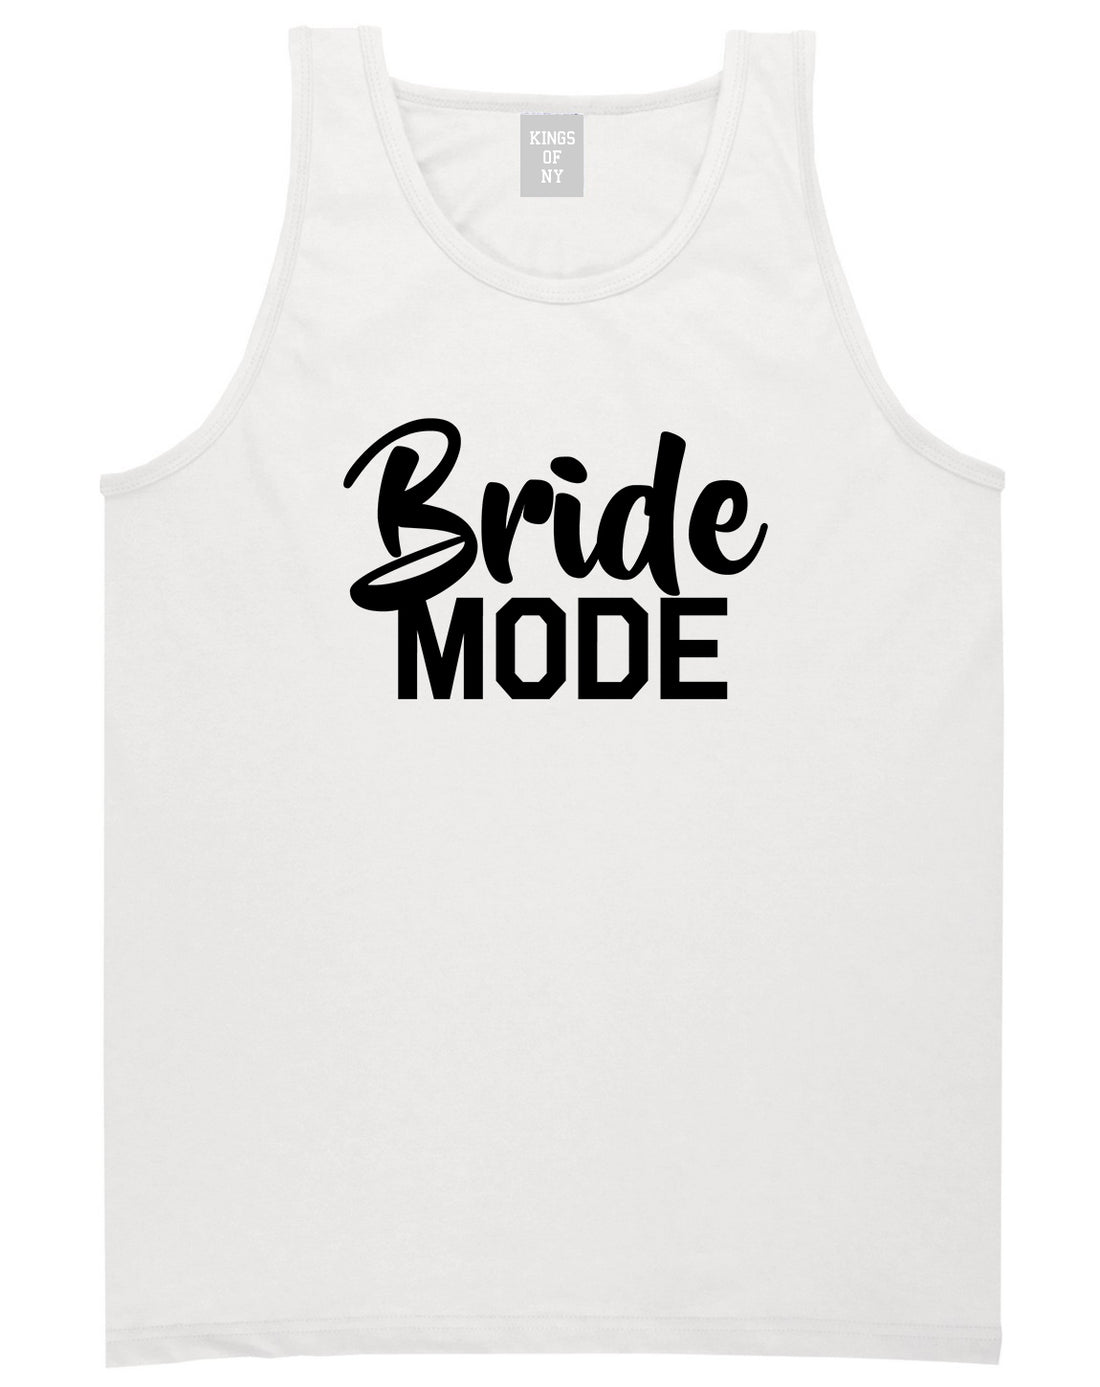 Bride Mode Bridal Mens White Tank Top Shirt by KINGS OF NY